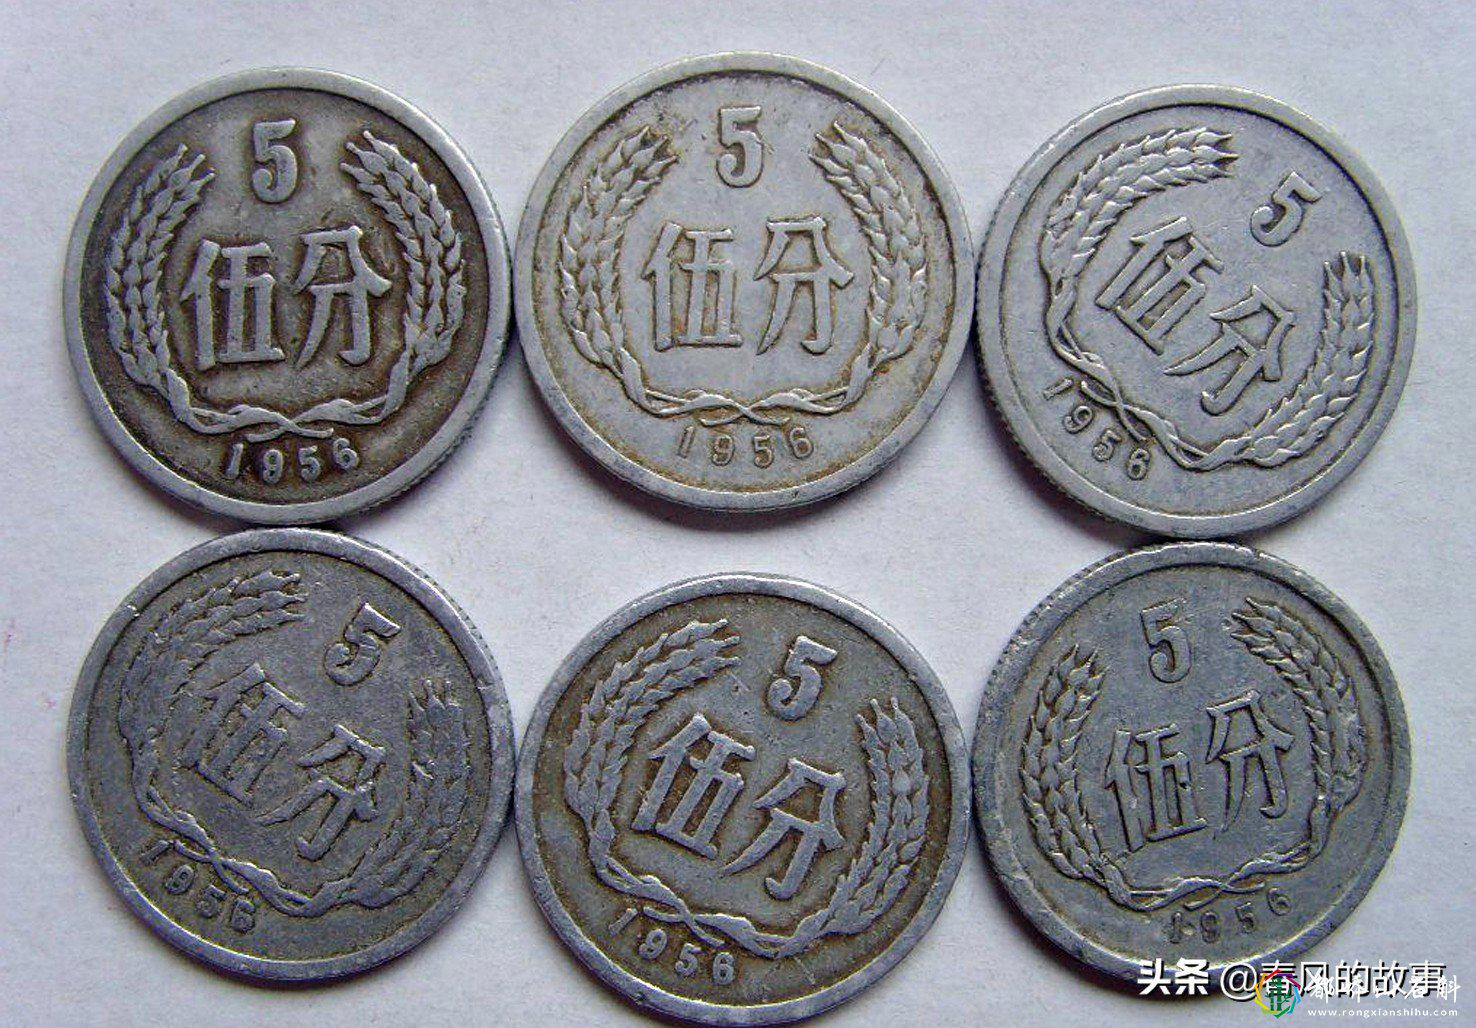 1956年5分硬币价格